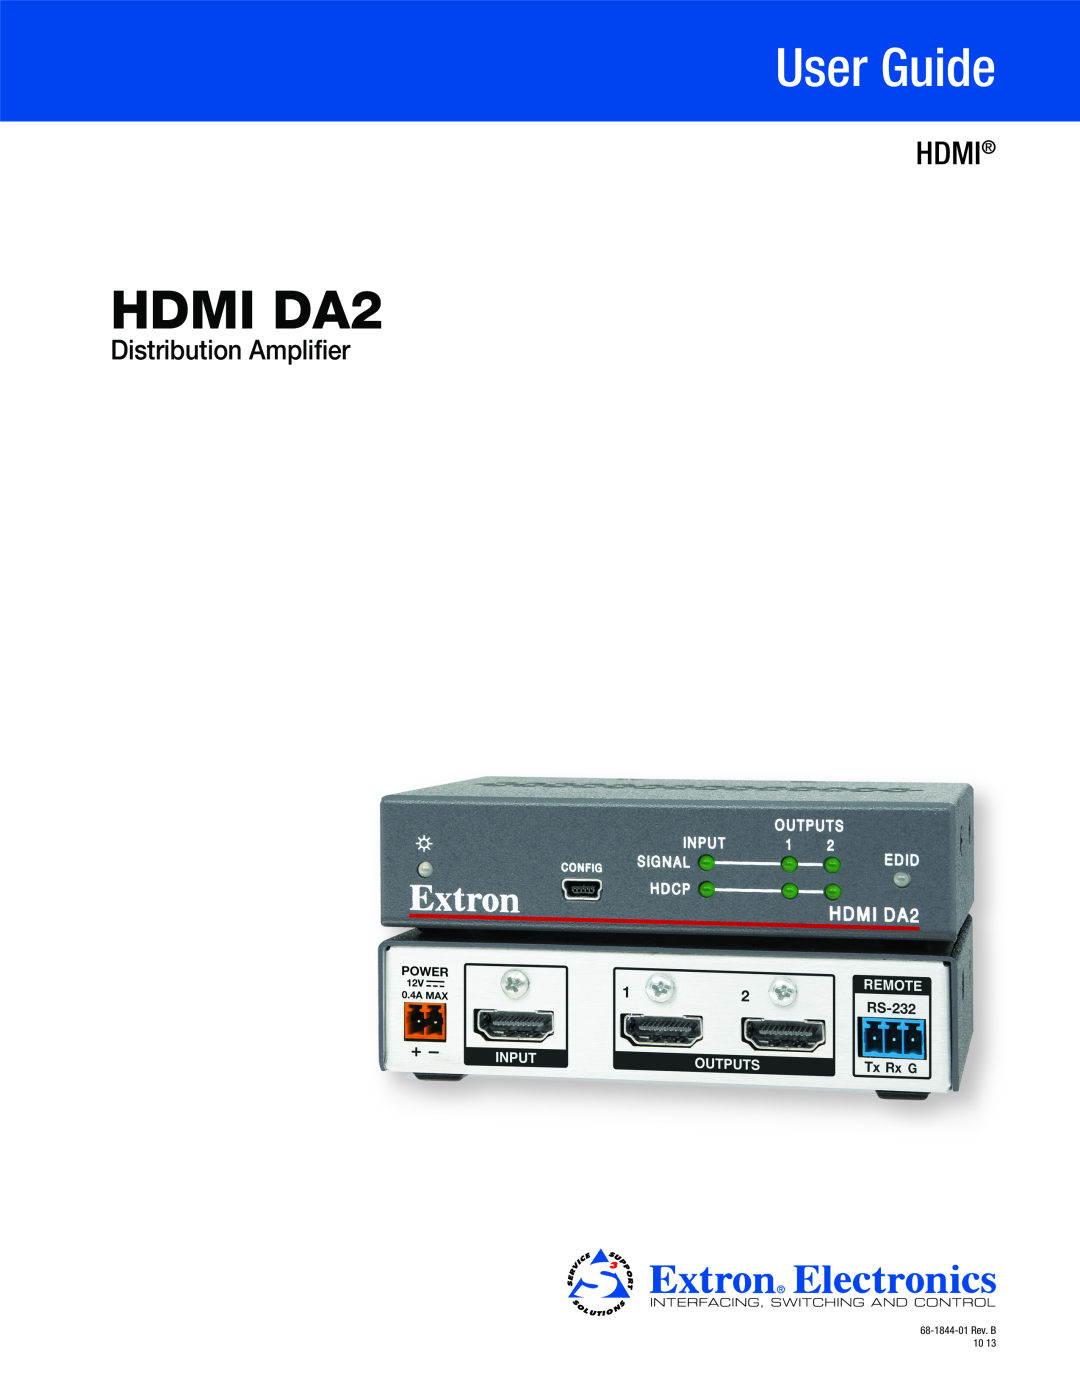 Extron electronic setup guide HDMI DA2 Setup Guide, a b d e, Overview, Front Panel, Rear Panel, Installation 